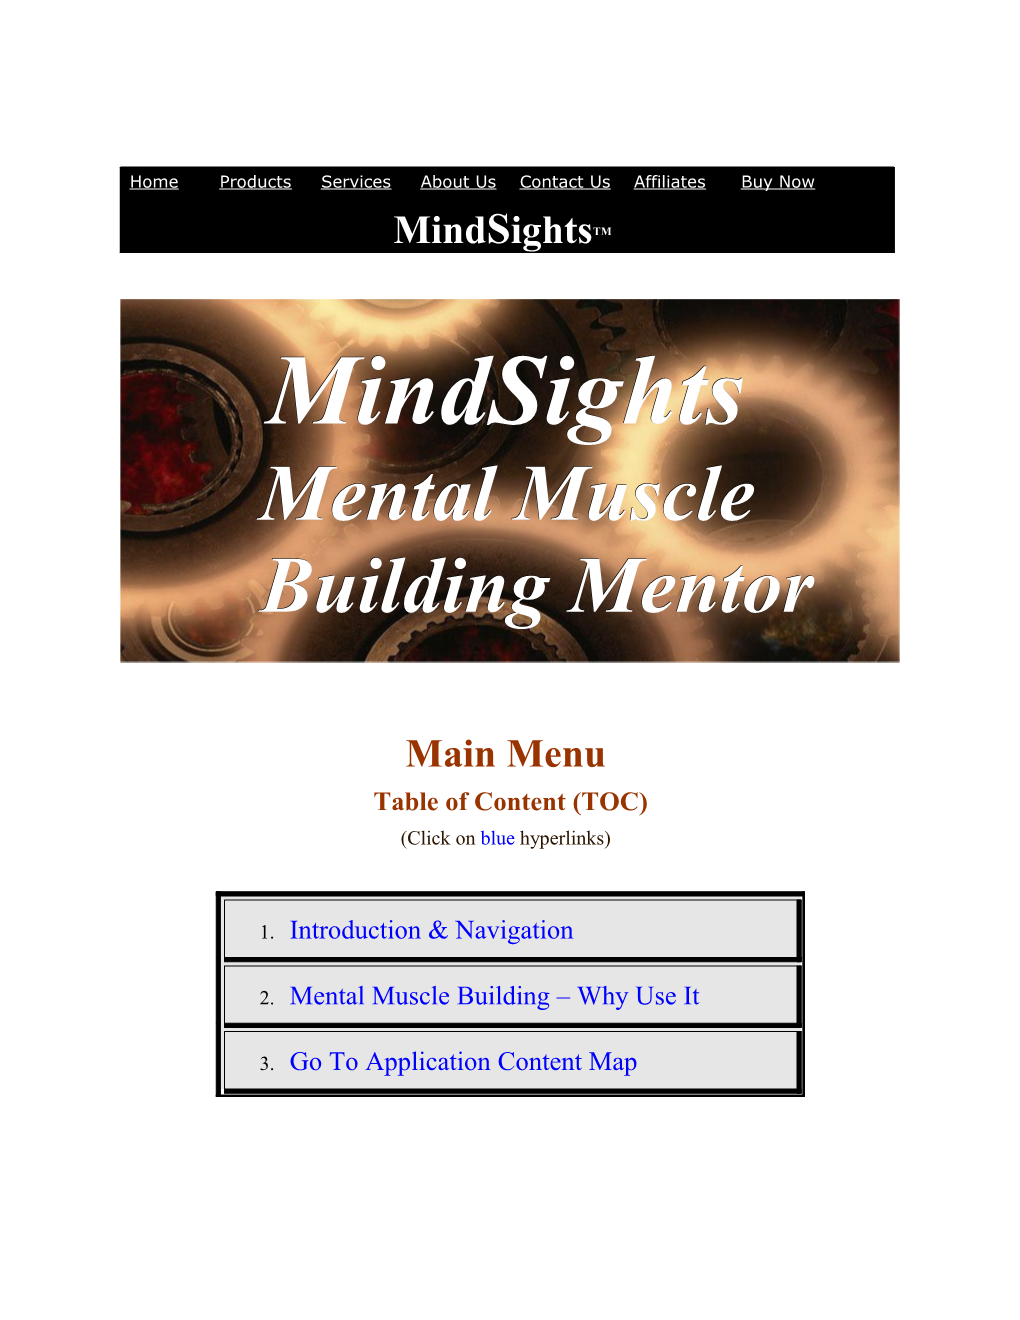 Mindsights Mental Muscle Application